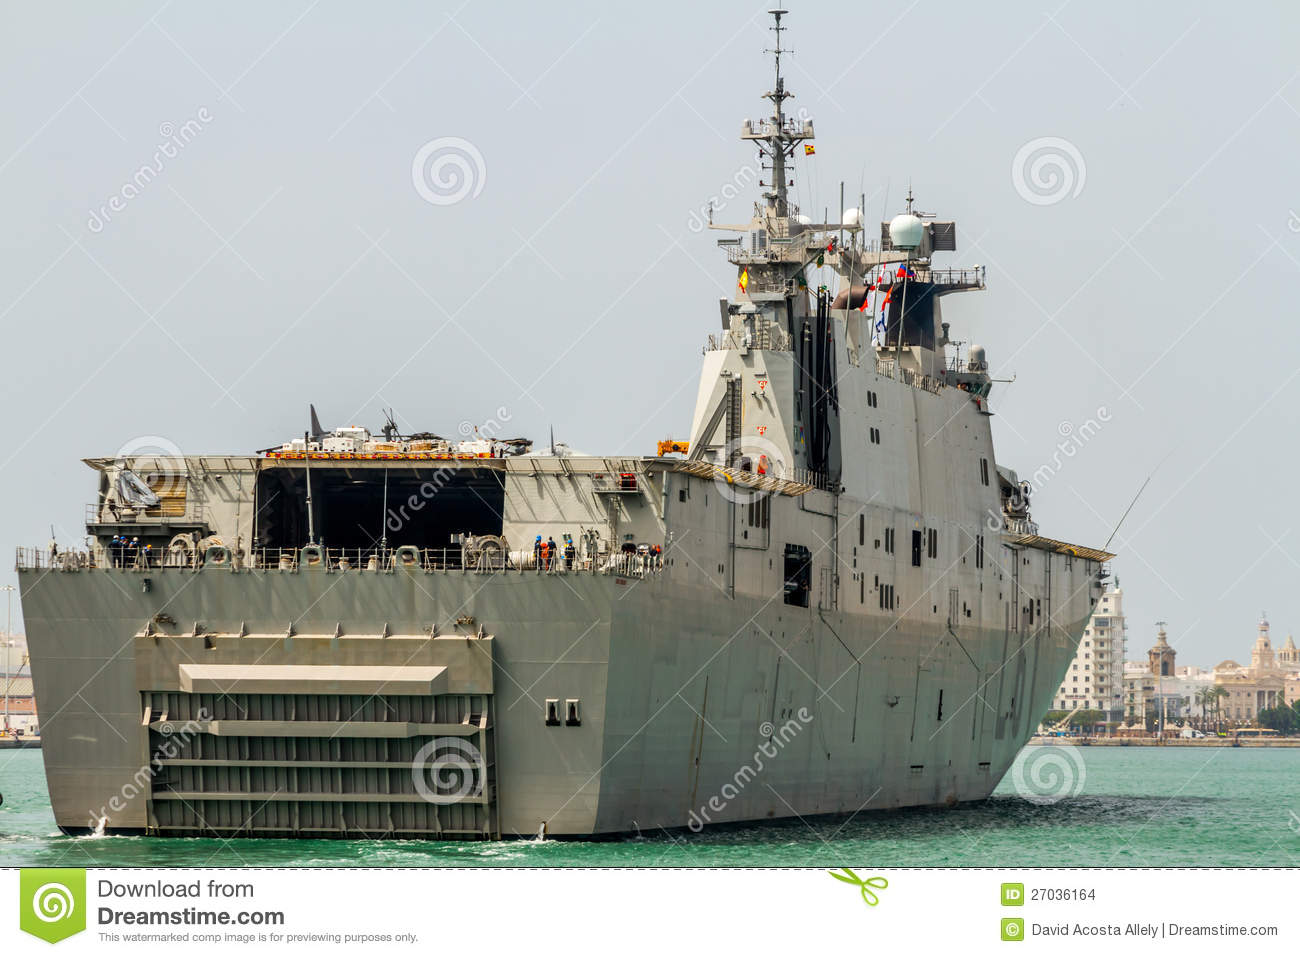 aircraft-carrier-l-61-juan-carlos-i-27036164.jpg